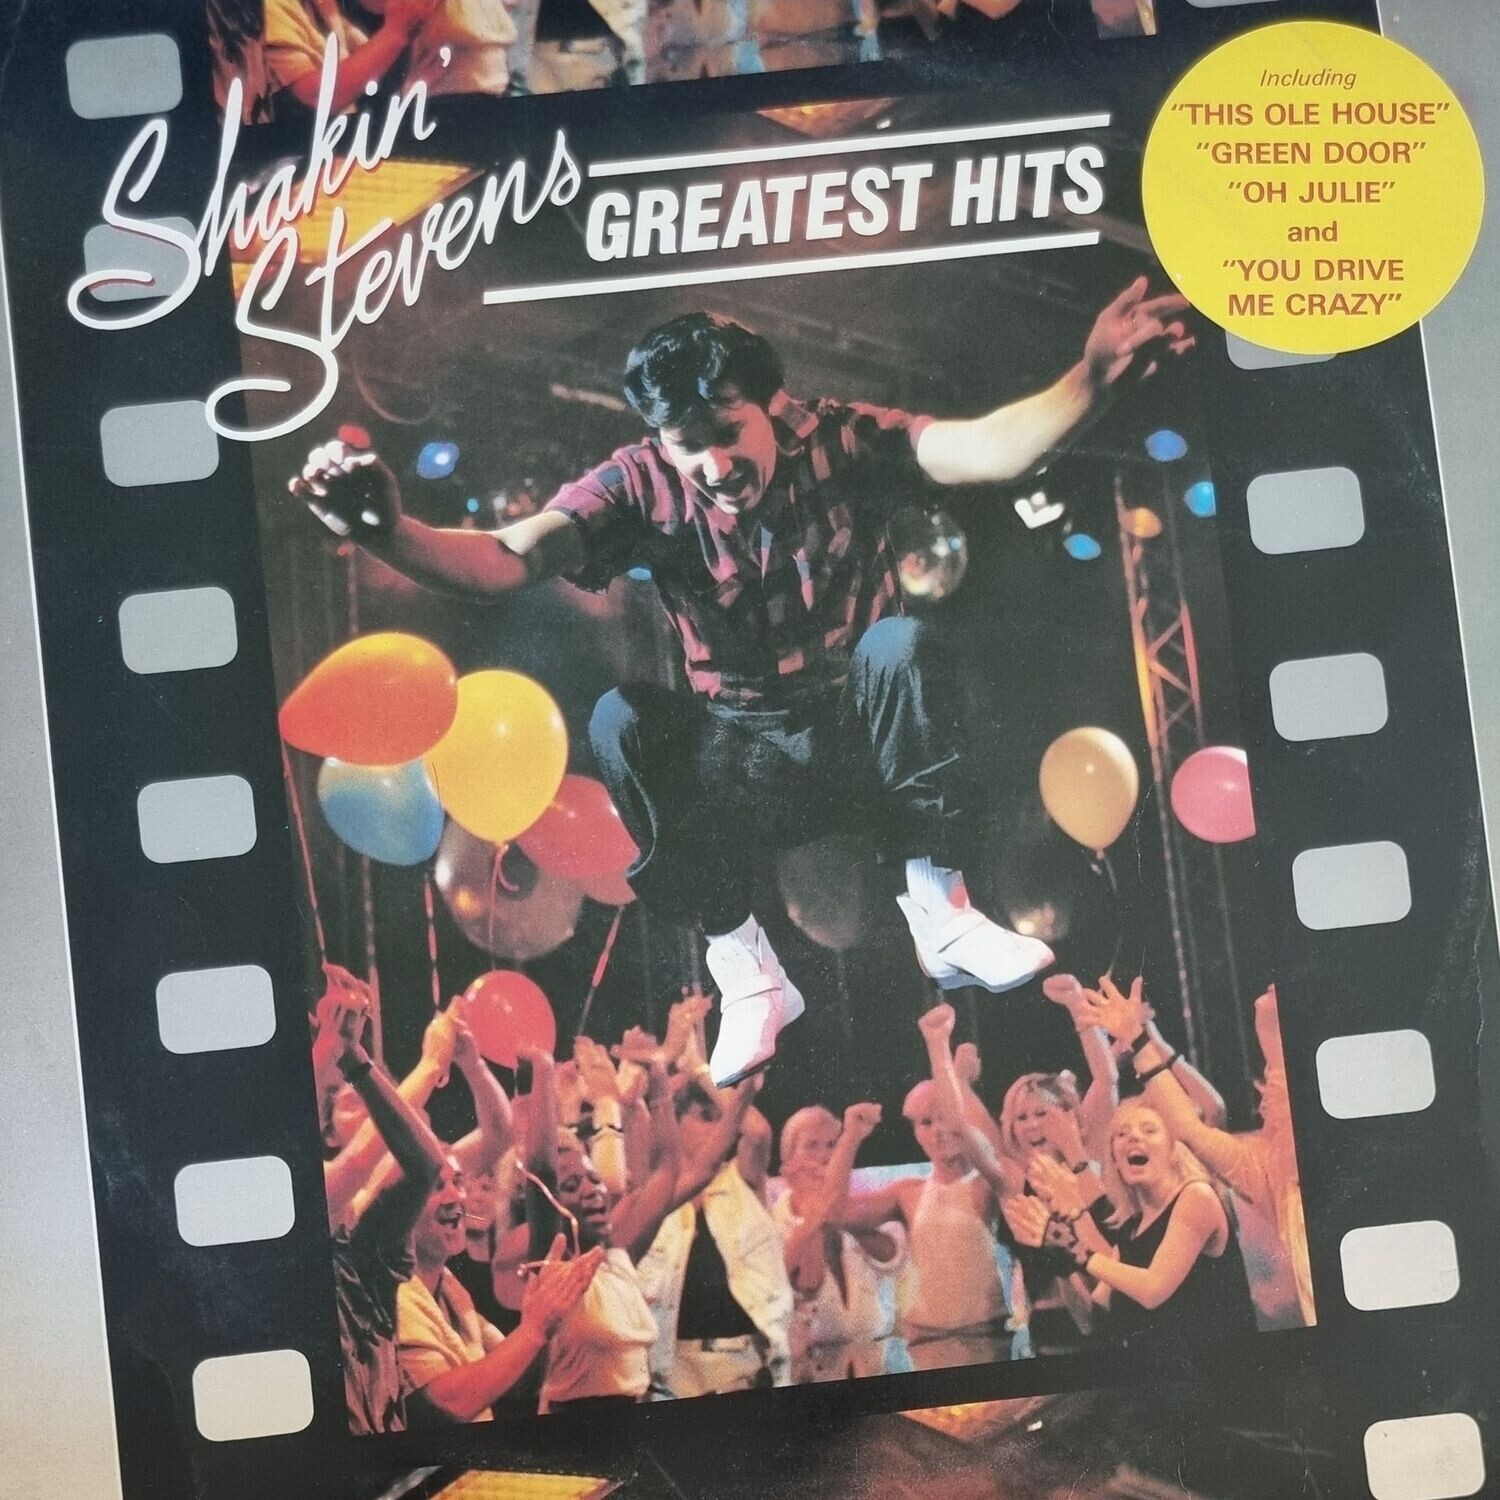 Shakin' Stevens – Greatest Hits Vol. 1 (1986)